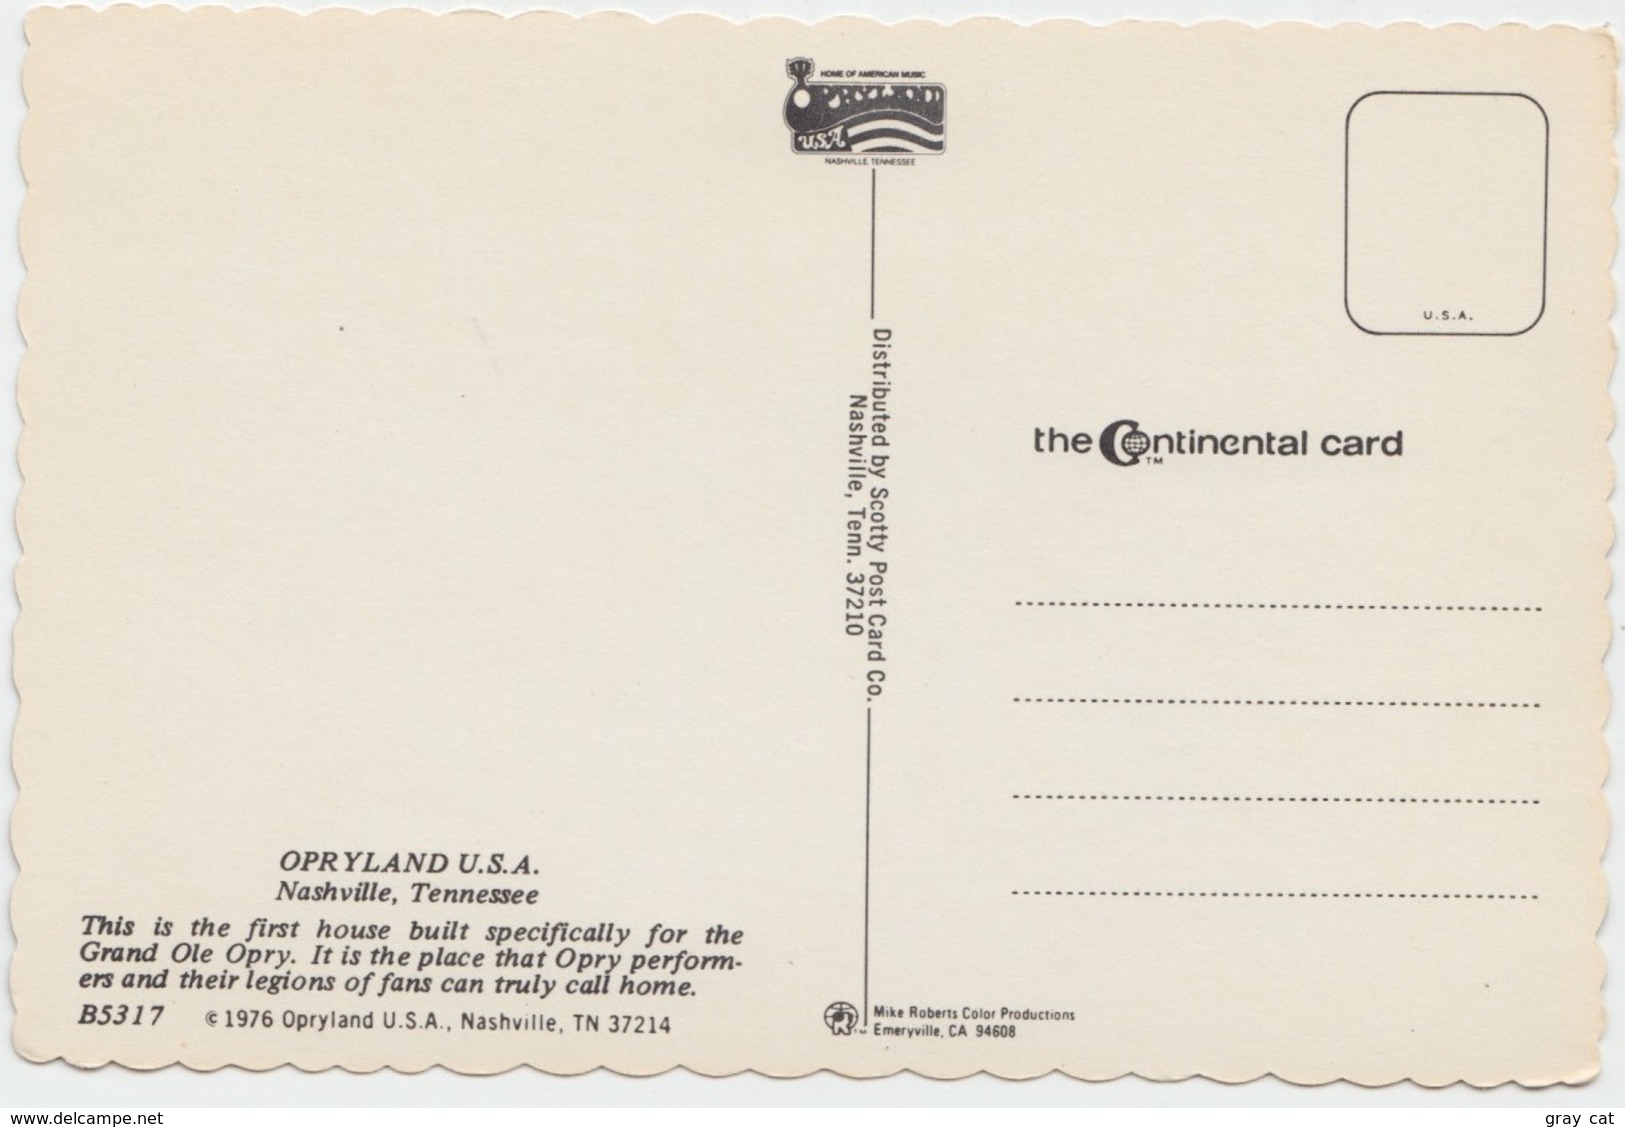 The Grand Ole Opry, OPRYLAND, U.S.A., Nashville, Tennessee, Unused Postcard [20918] - Nashville